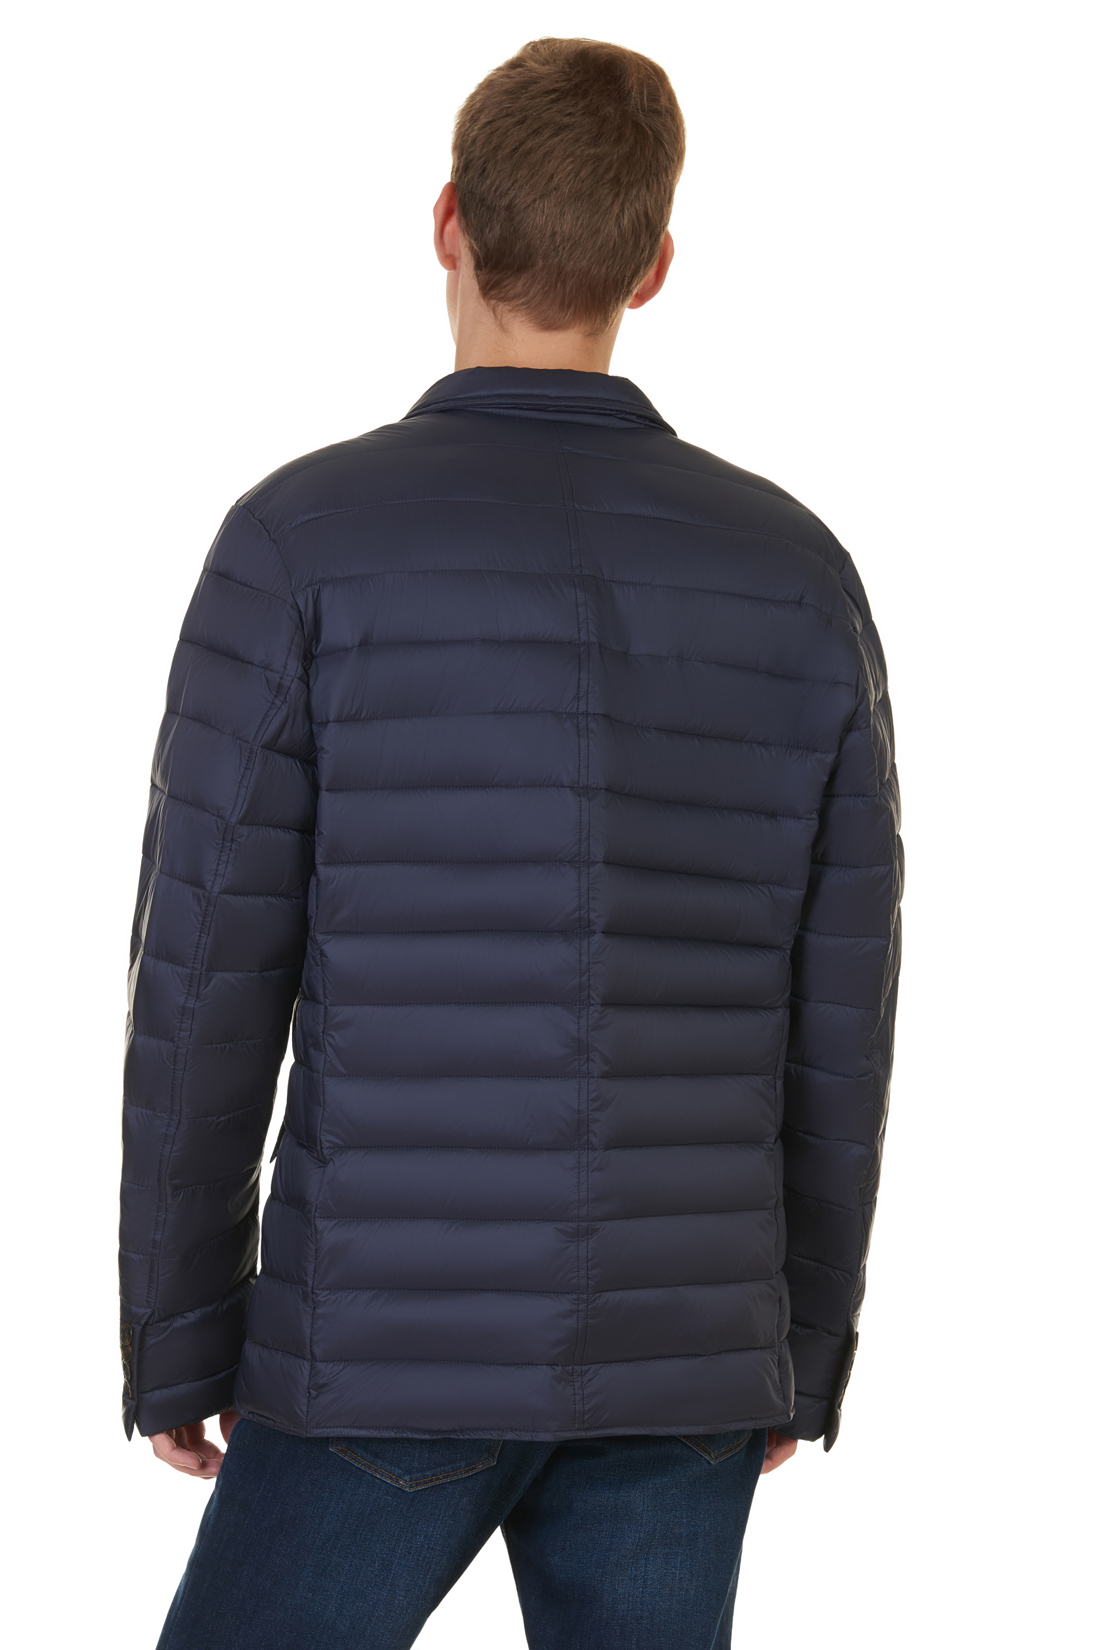 Куртка-пиджак (арт. baon B537561), размер XL, цвет синий Куртка-пиджак (арт. baon B537561) - фото 2